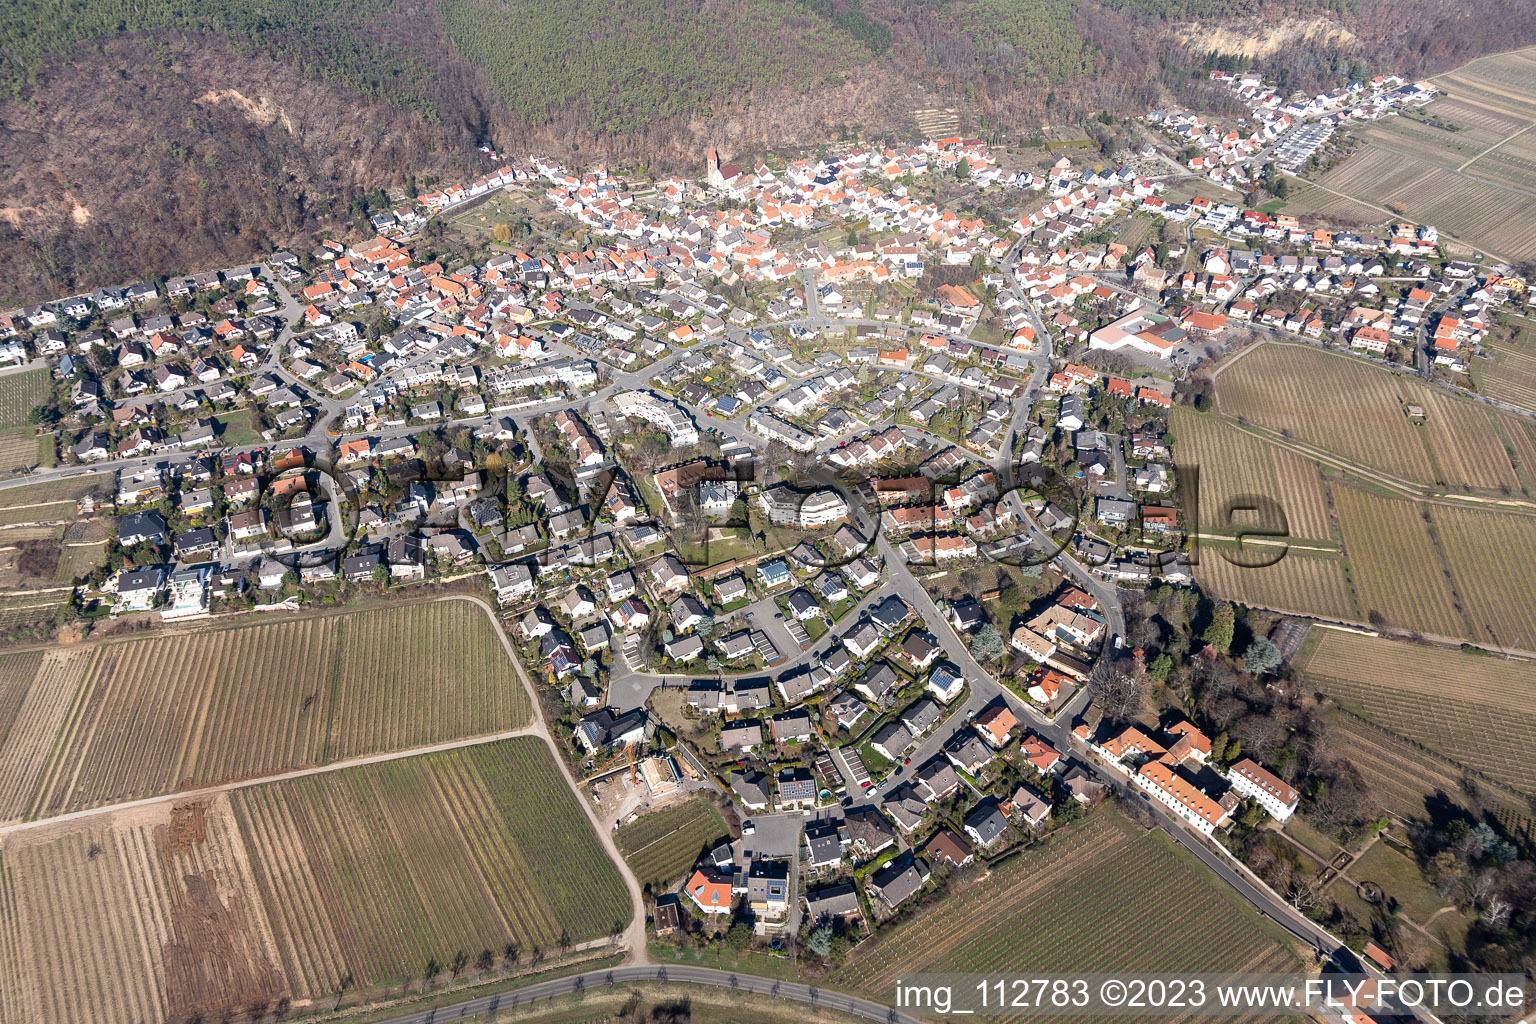 Aerial view of District Königsbach in Neustadt an der Weinstraße in the state Rhineland-Palatinate, Germany